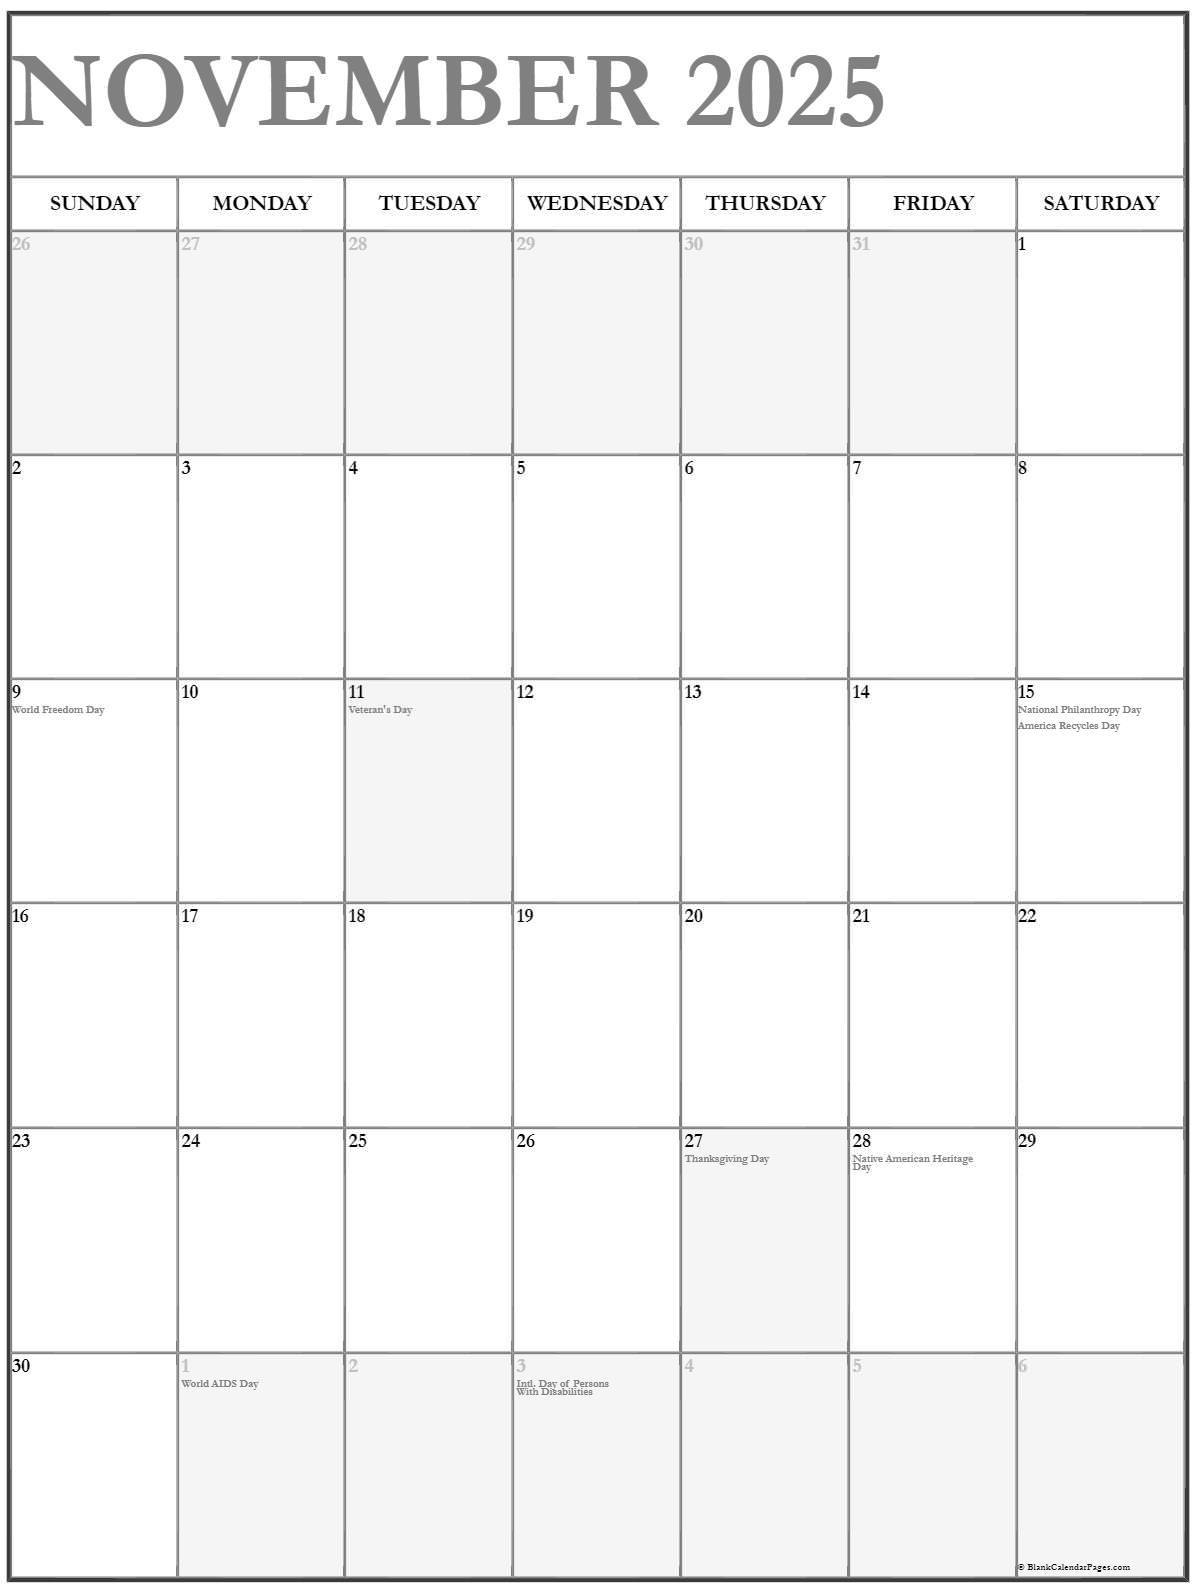 November 2025 Calendar Sheet 